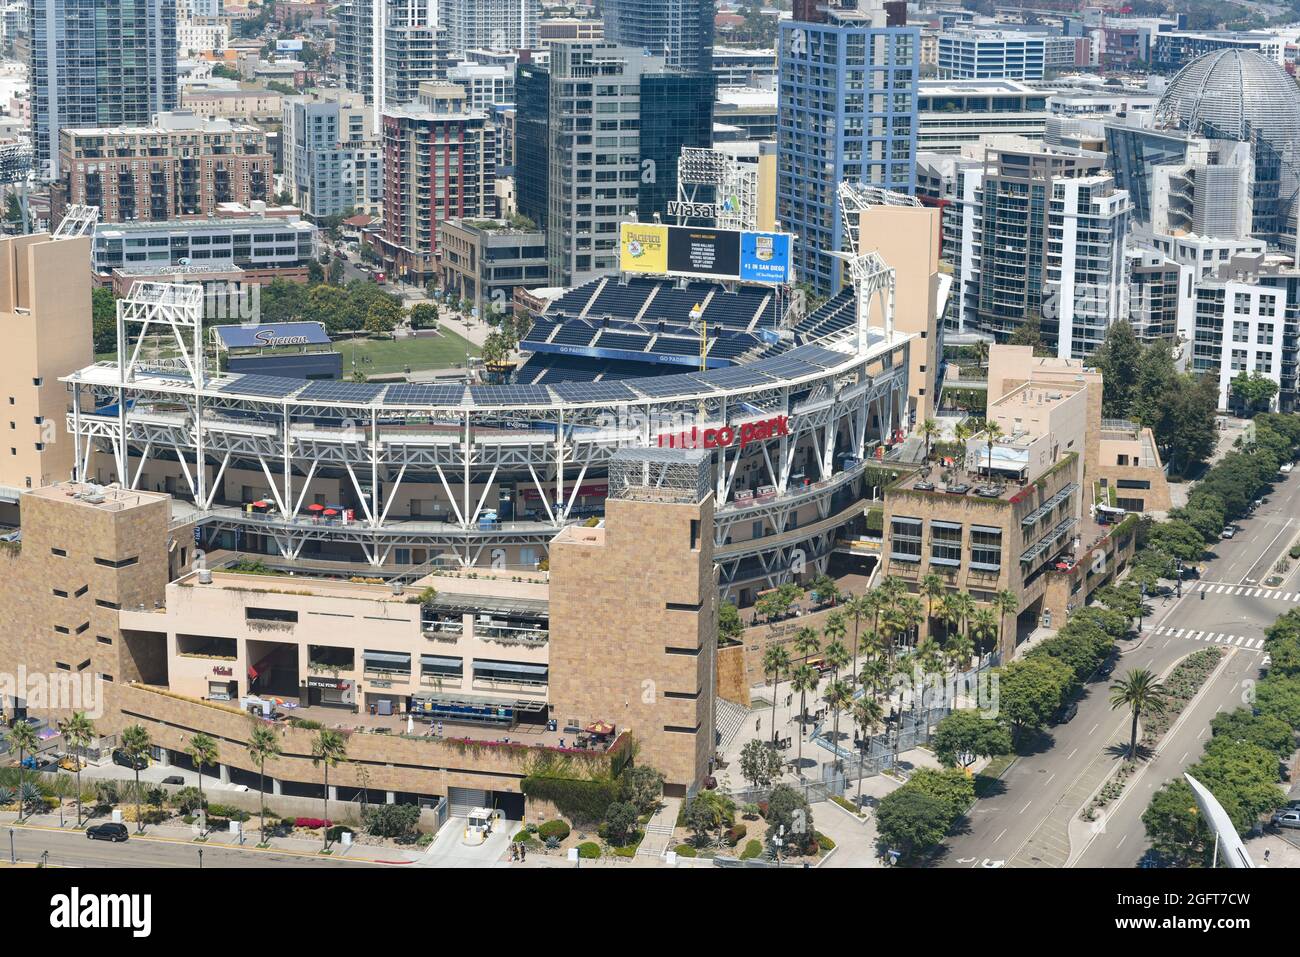 SAN DIEGO , CALIFORNIA - 25 AGO 2021: Petco Field, sede dei San Diego Padres della National League West Division della Major League Baseball. Foto Stock